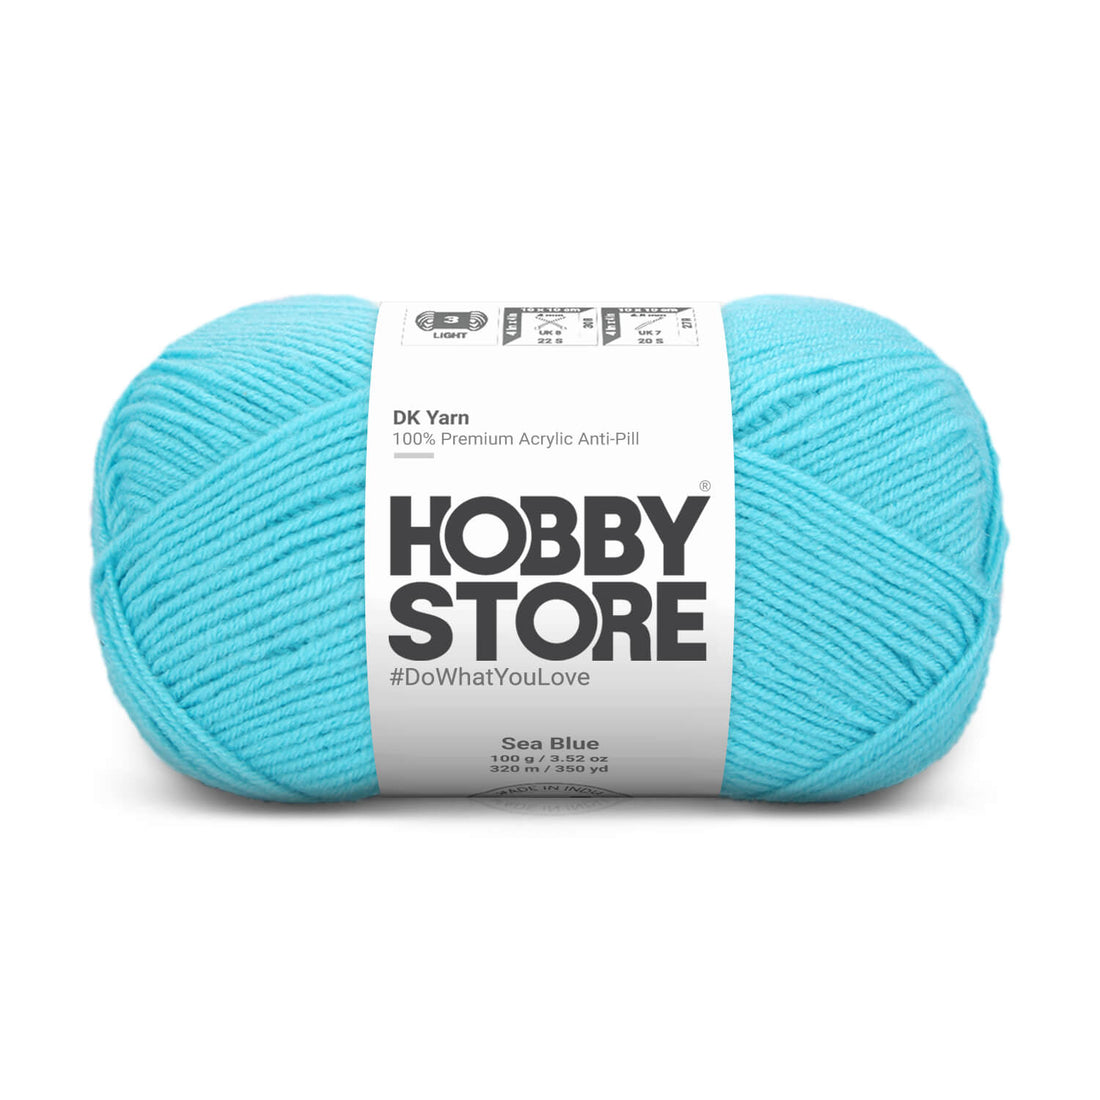 DK Anti-Pill Yarn by Hobby Store - Sea Blue 5022